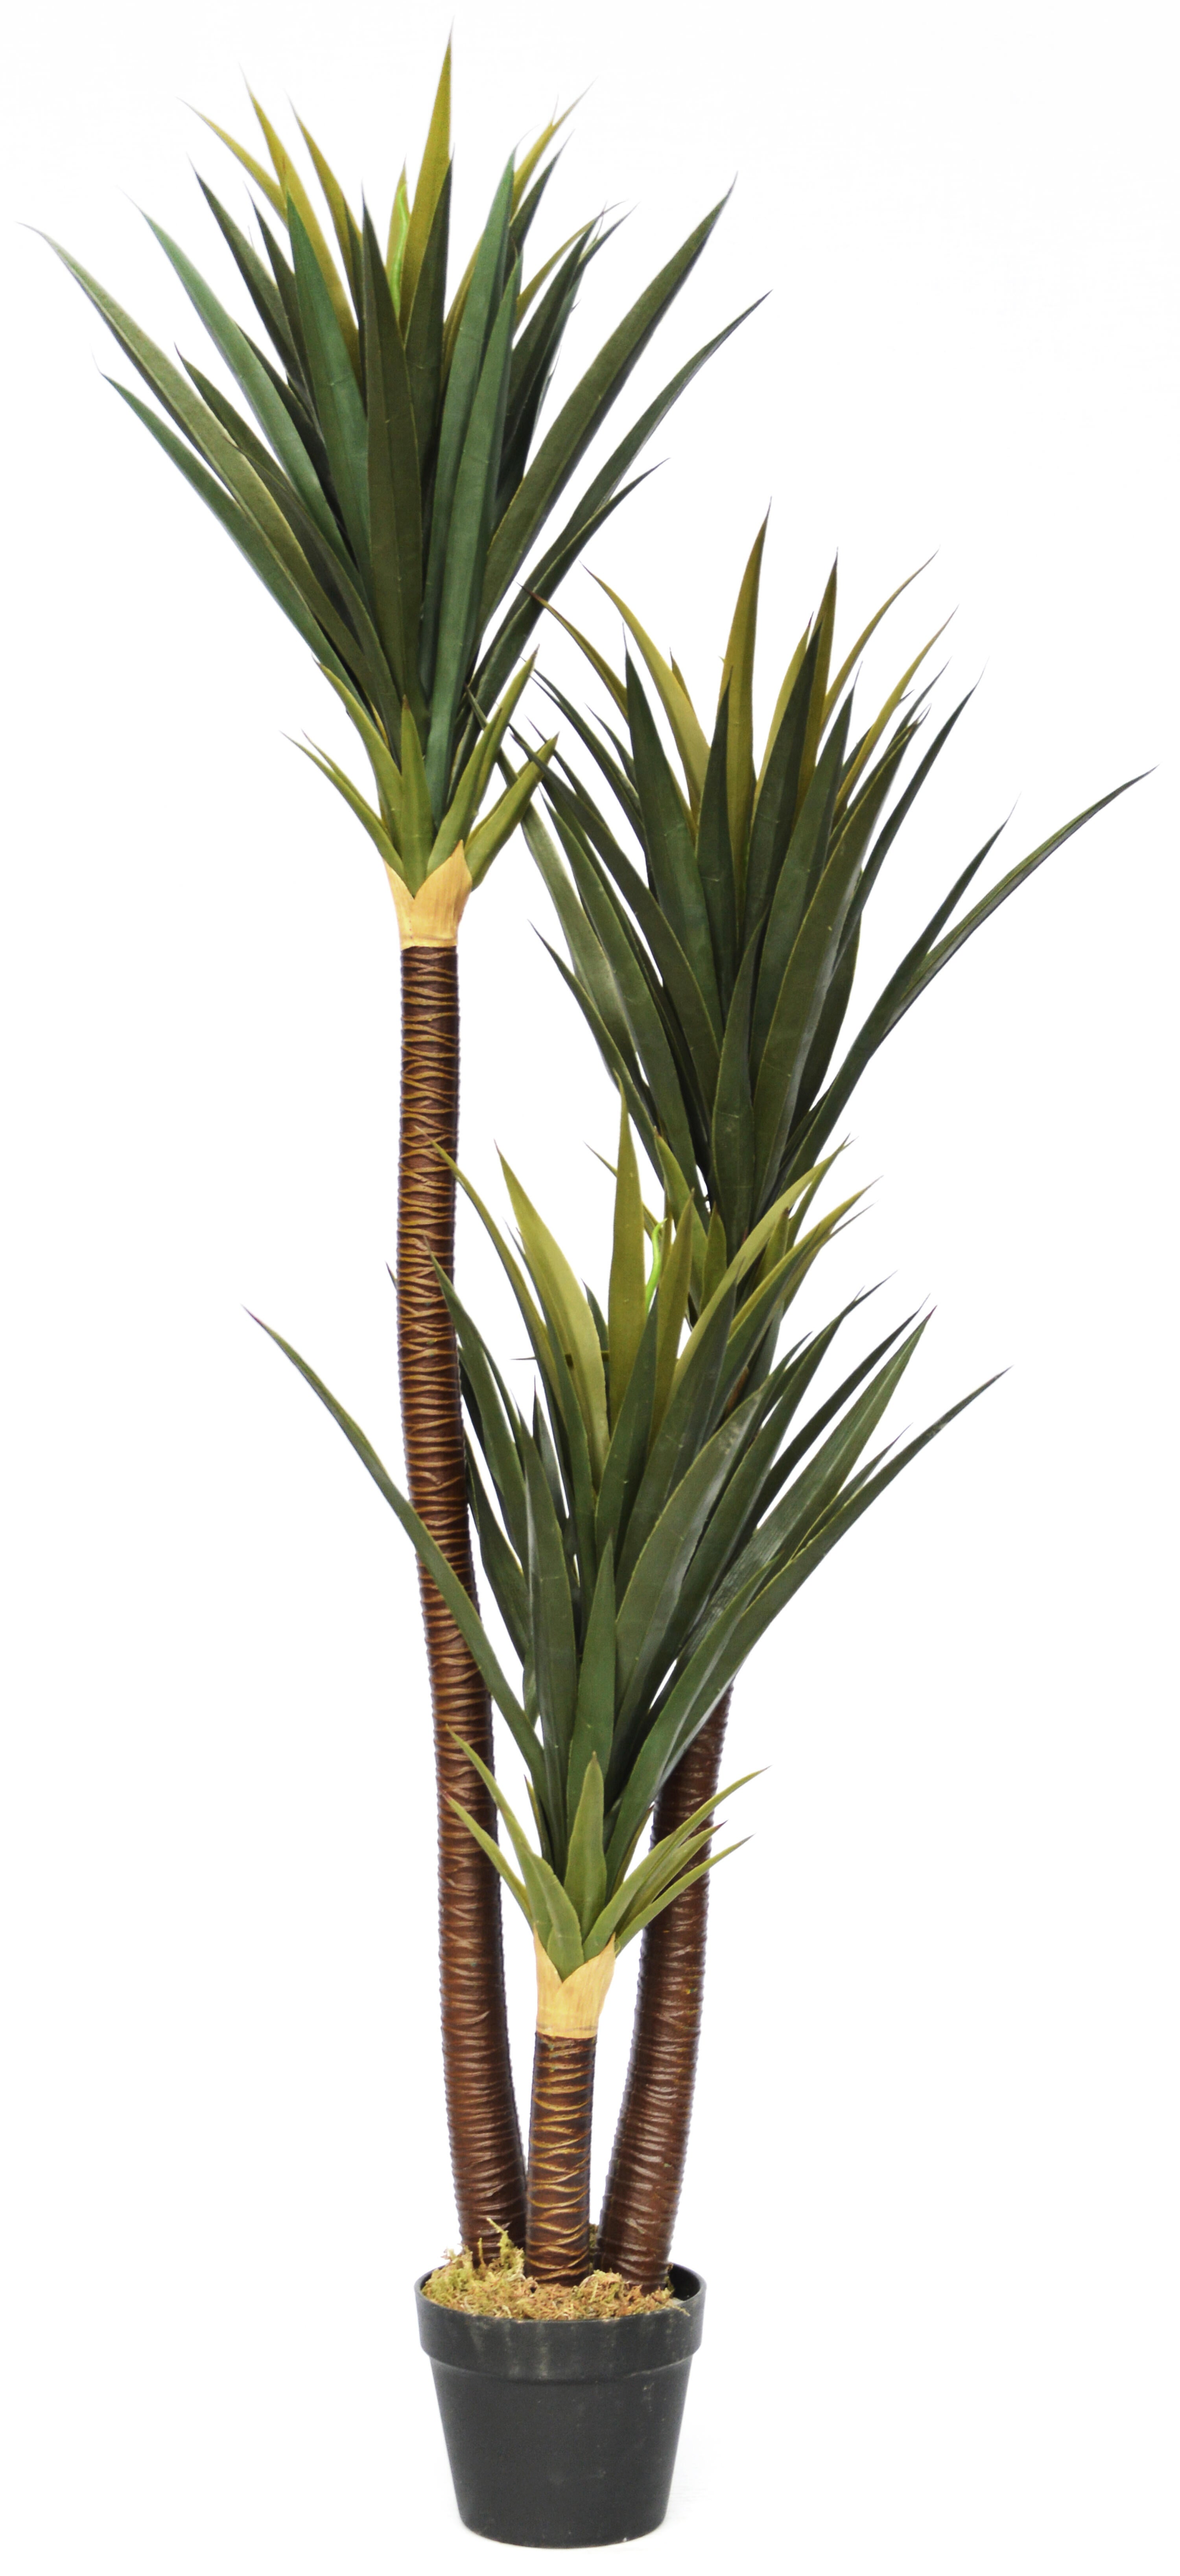 Planta artificial yuca de 150 cm de altura en maceta de 17.5 cm